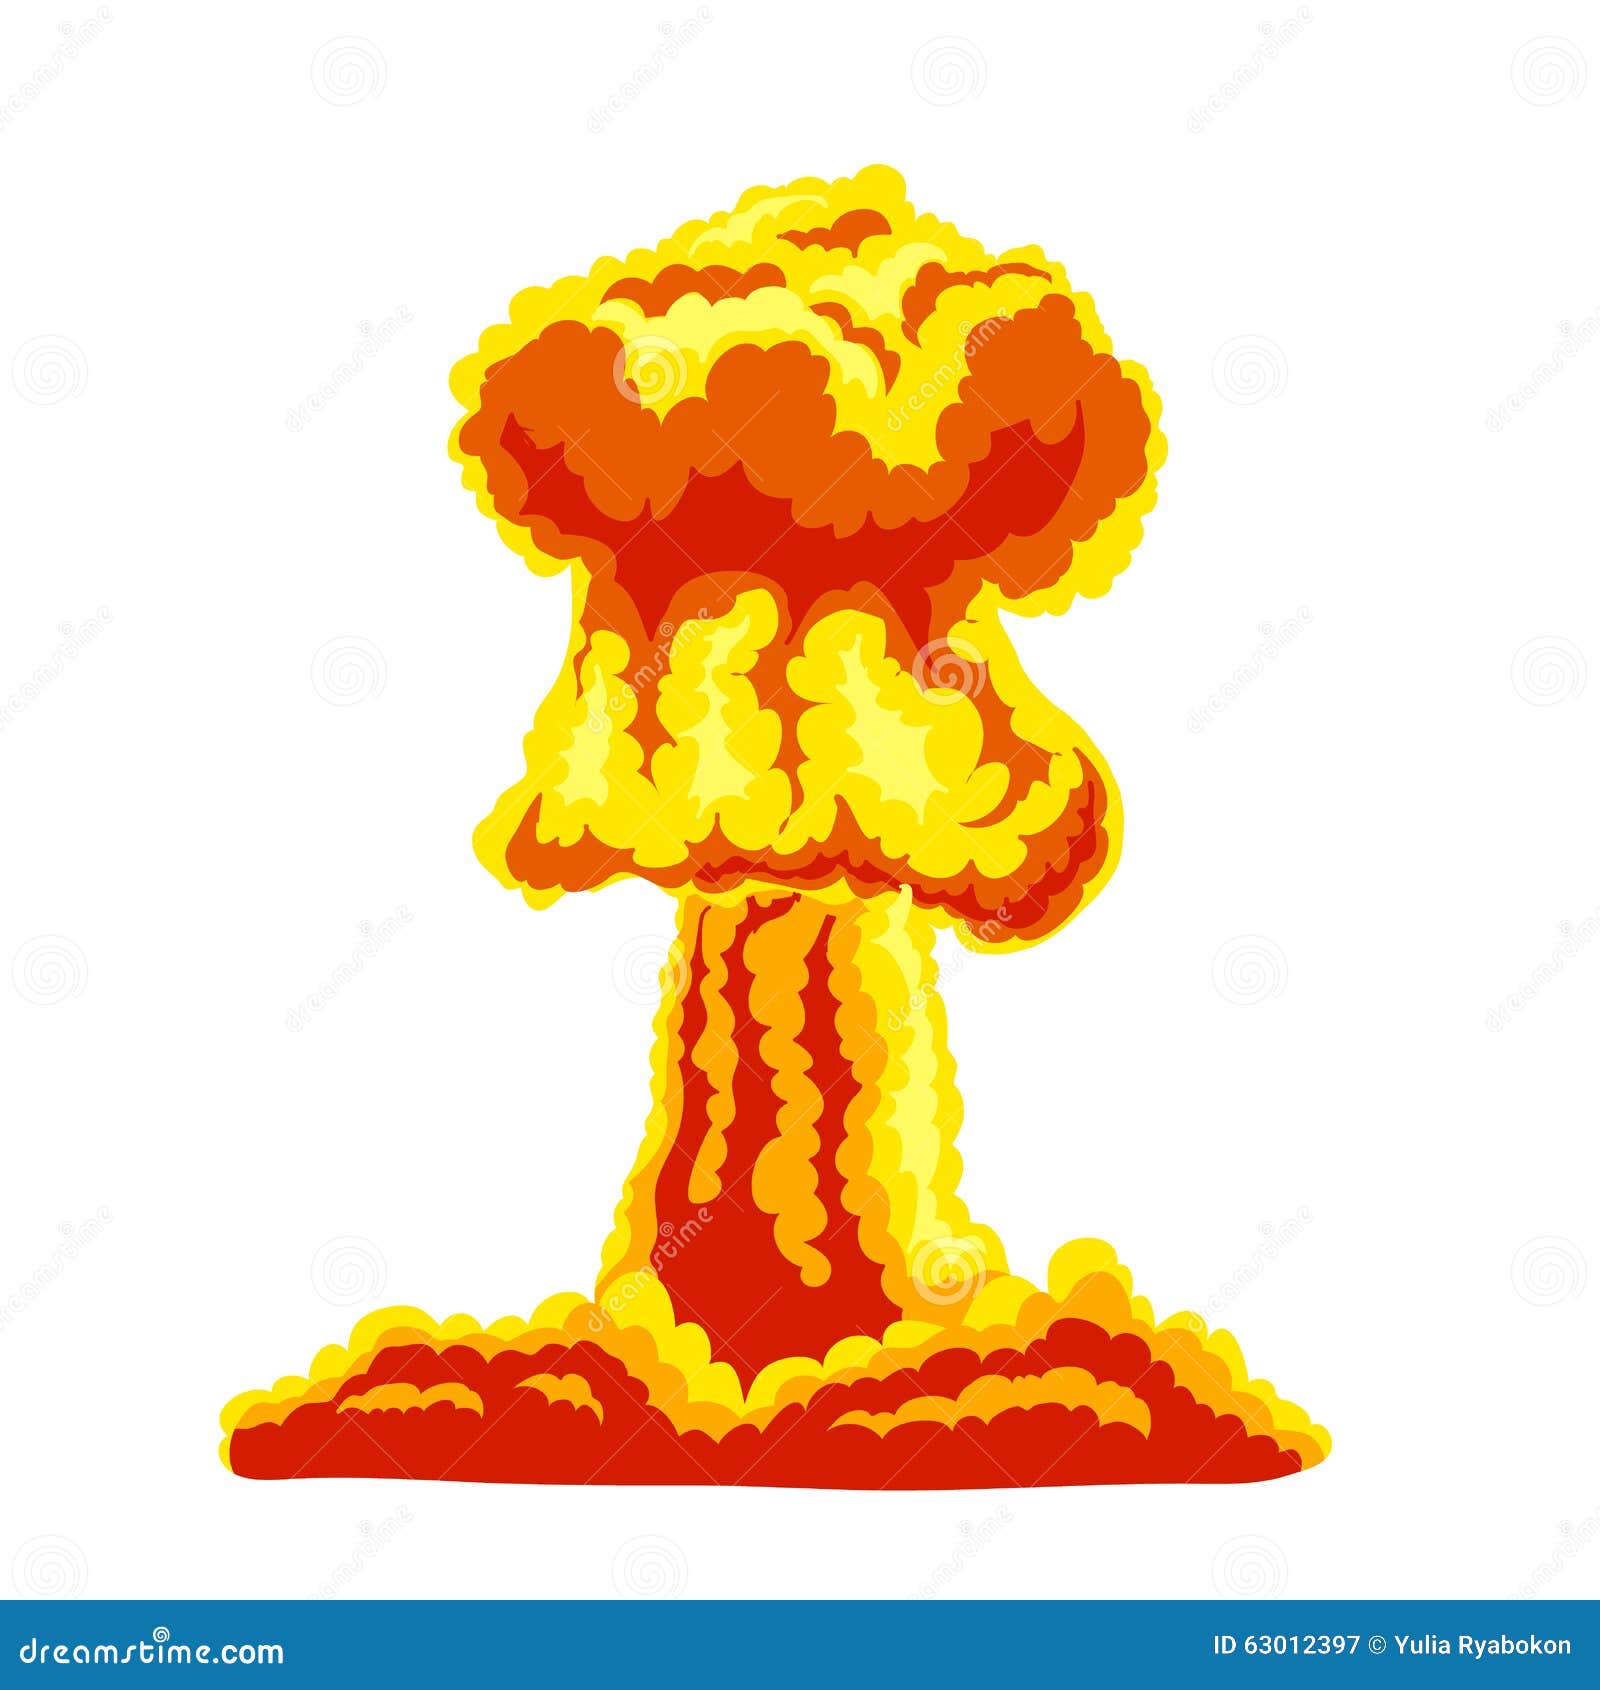 free clip art mushroom cloud - photo #11